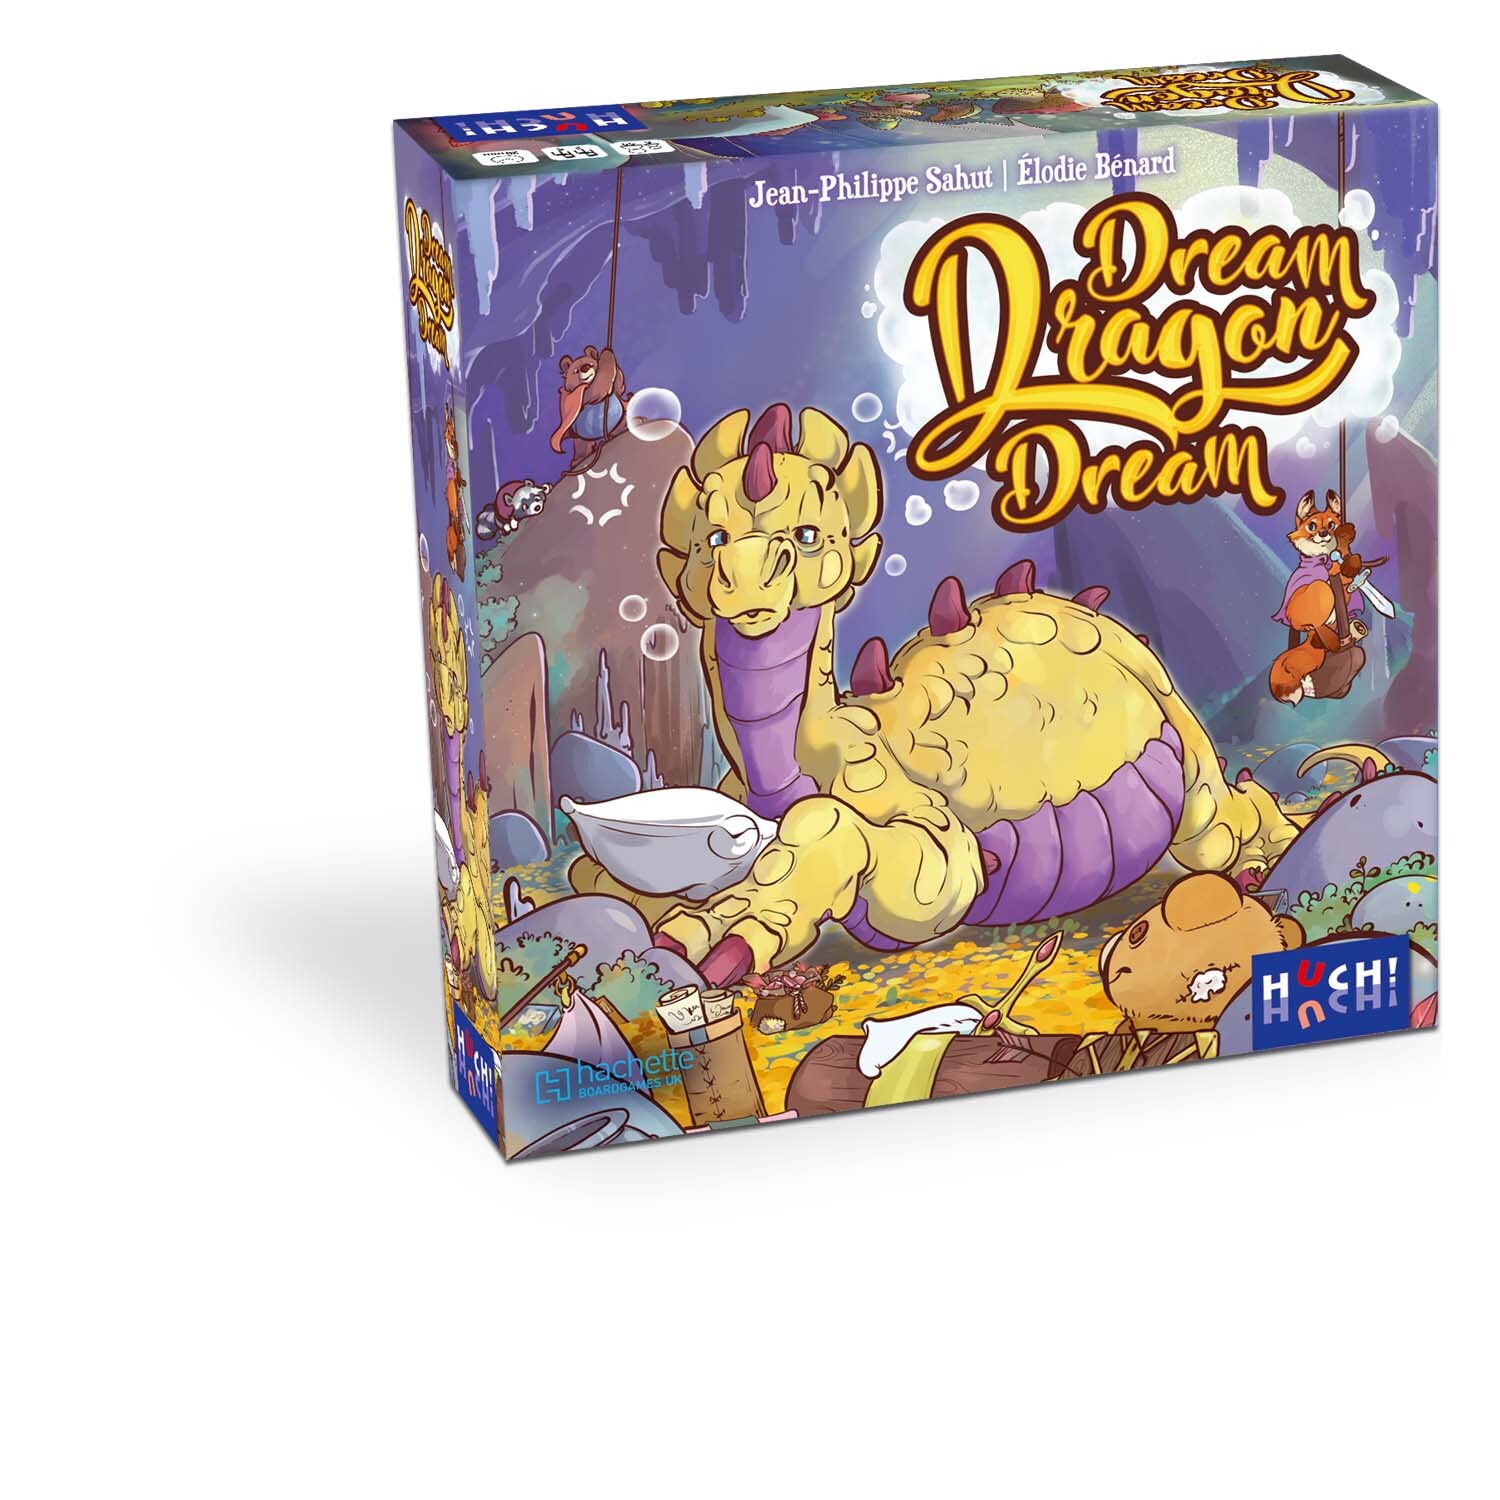 Dream Dragon Dream von HUCH!